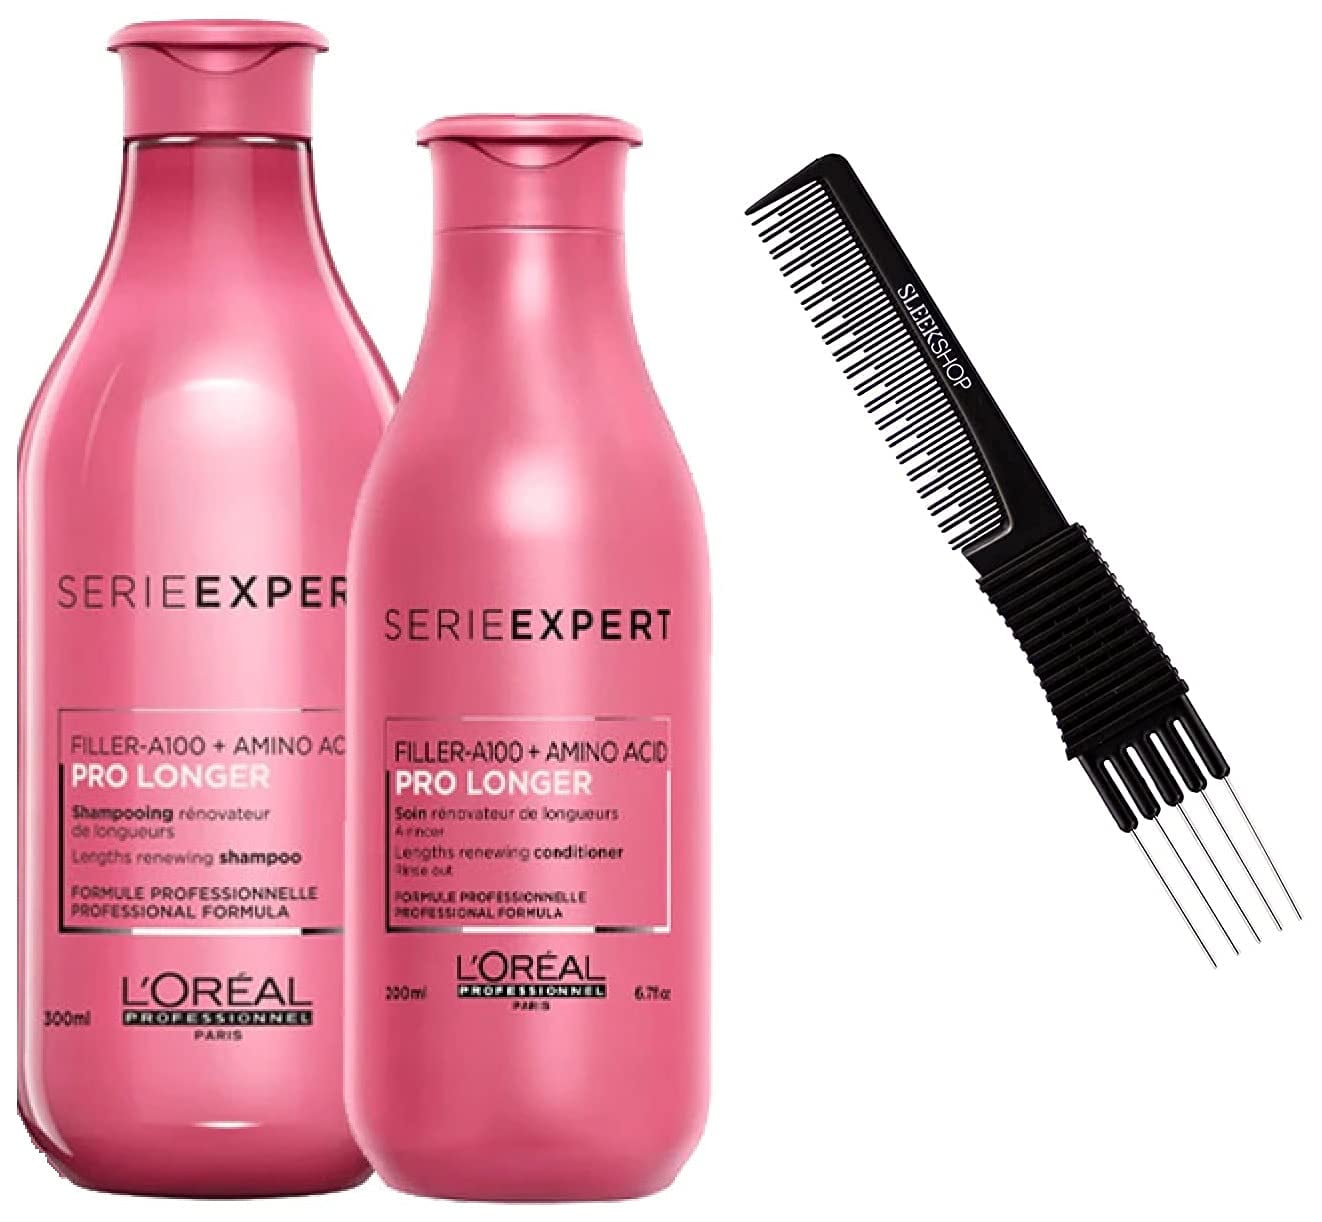 L'oreal EXPERT Filler-A100 + Amino Acid PRO LONGER Lengths Renewing Shampoo & Conditioner DUO SET KIT Hair (w/ Sleek Loreal Teasing Comb) (PRO LONGER LENGTHS - 10.1 oz + 6.7 oz) - Walmart.com